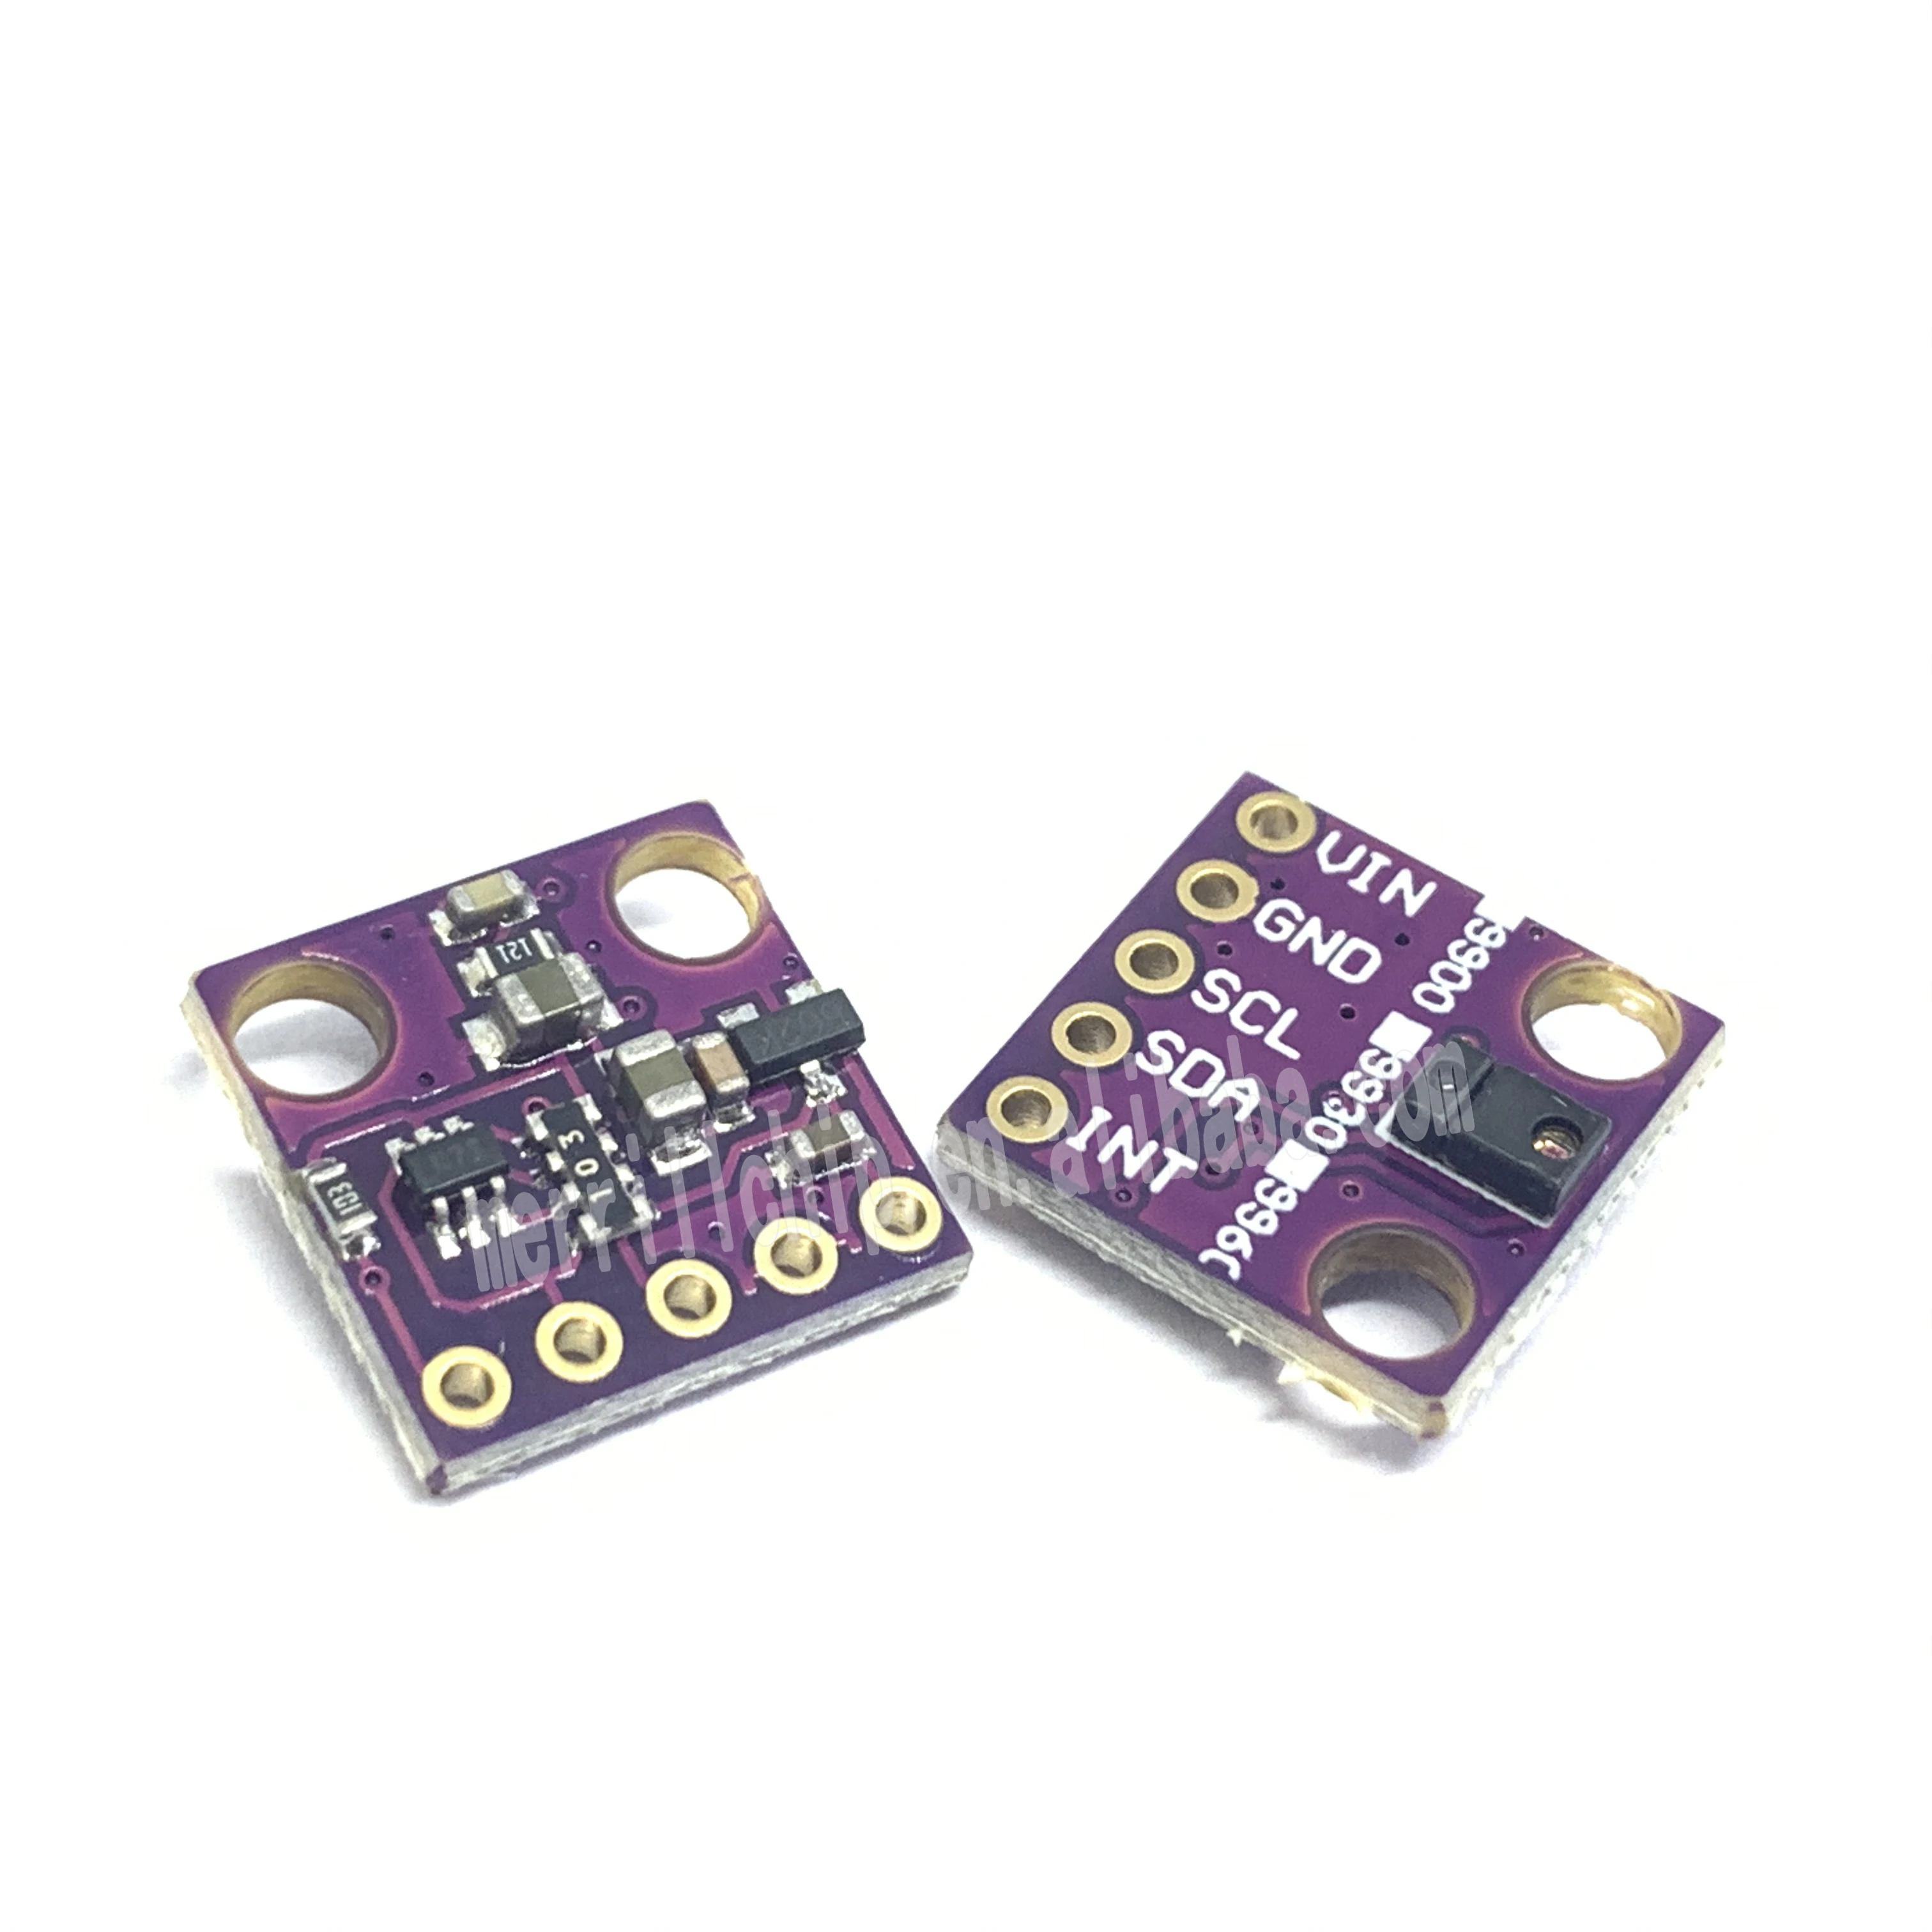 Merrillchip APDS9960 Sensor Module RGB and Gesture Sensor PCB Board GY-9960-LLC APDS-9960